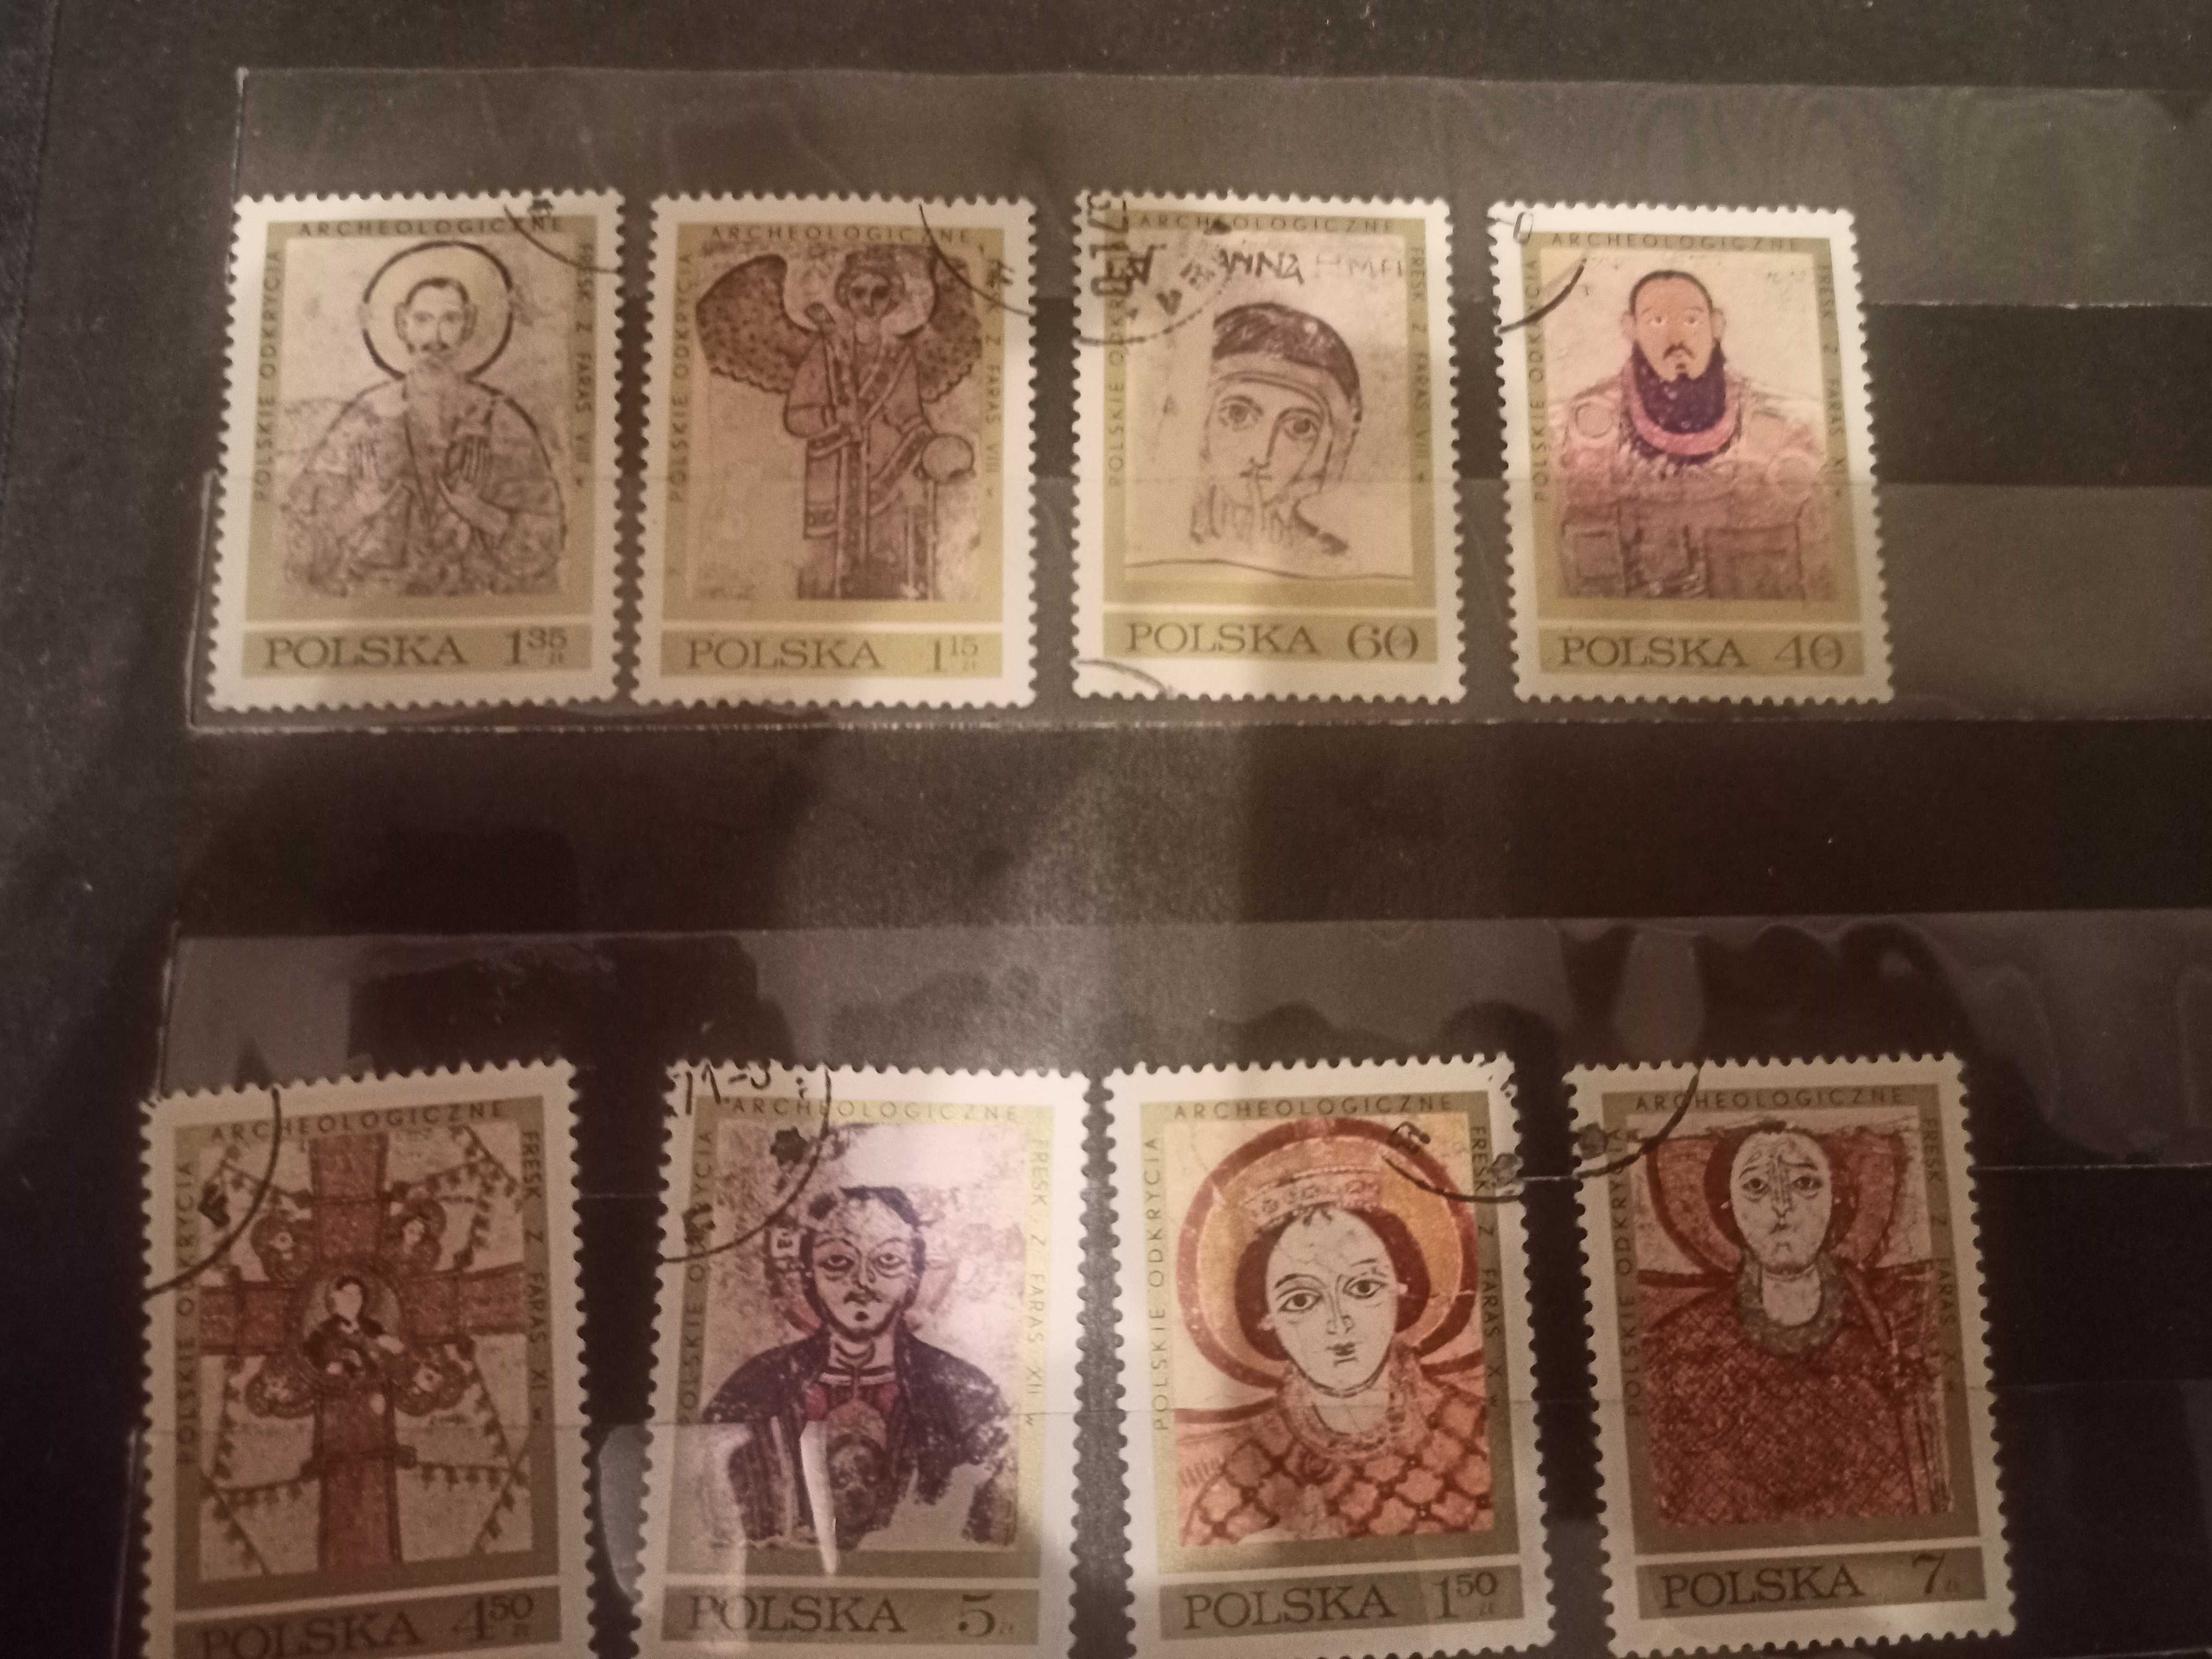 Продам марки Польша 1971 год. Фрески галереи Фарас, 8 марок